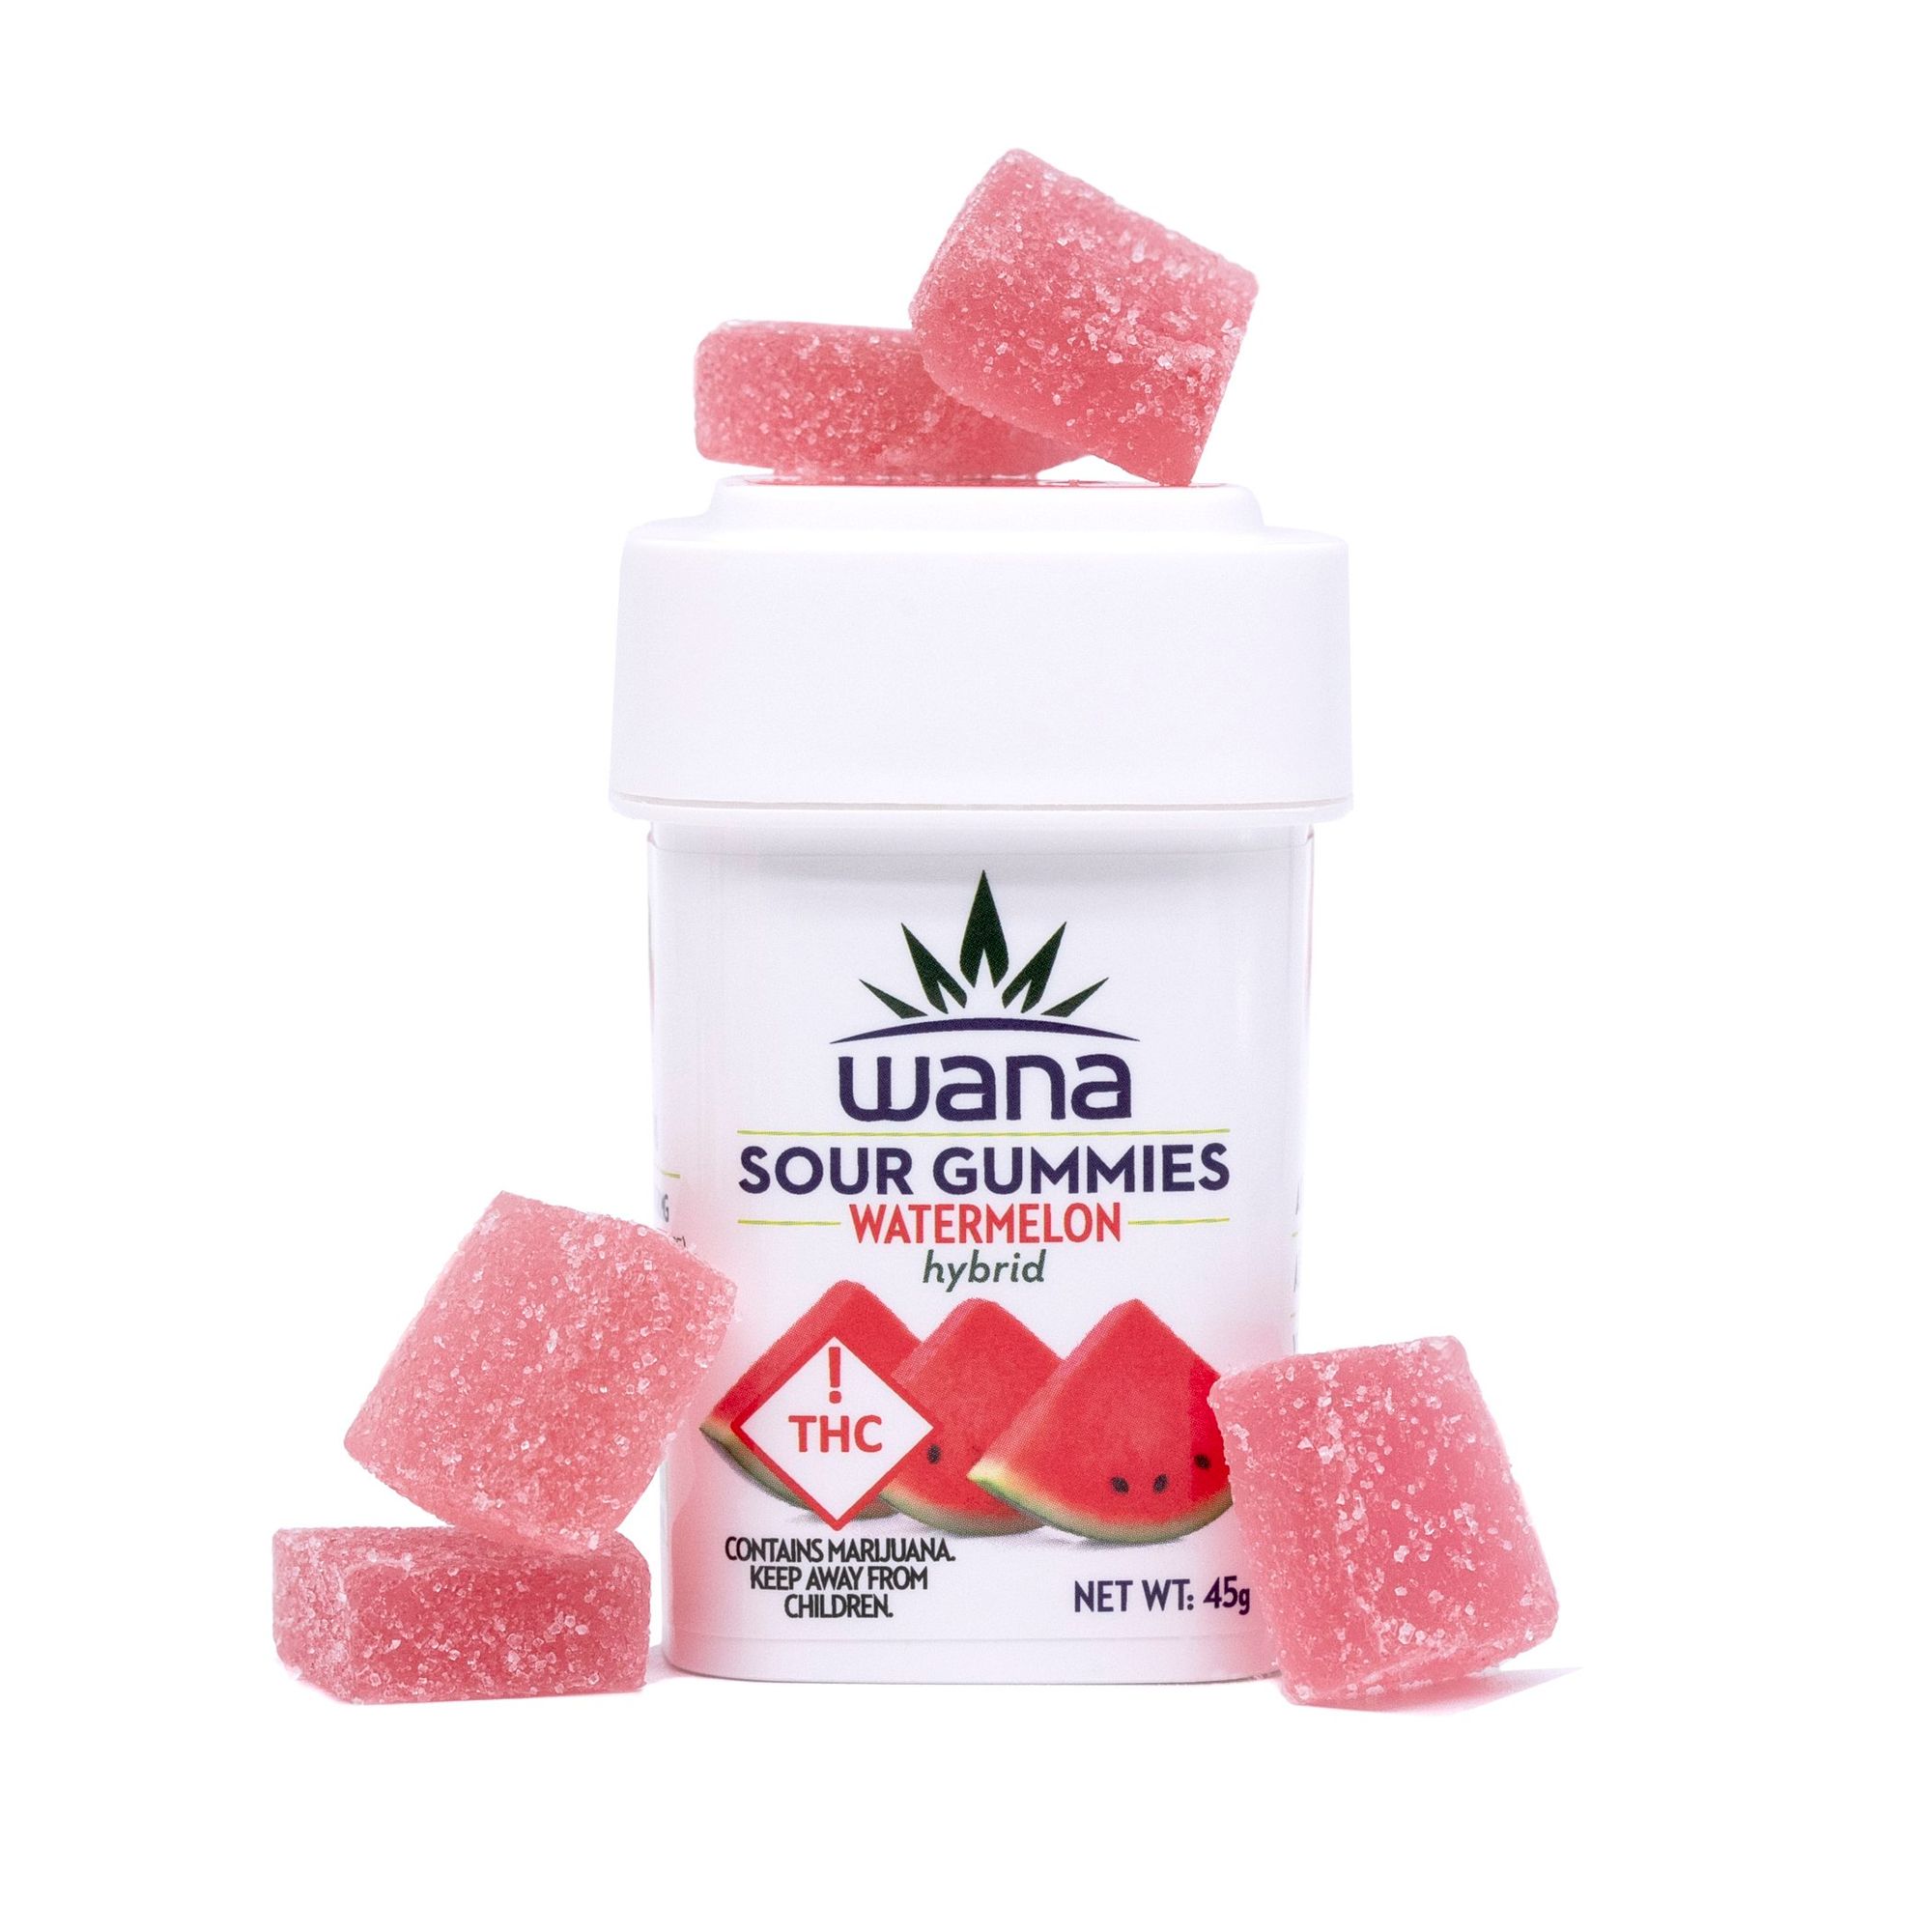 Watermelon Sour Gummies